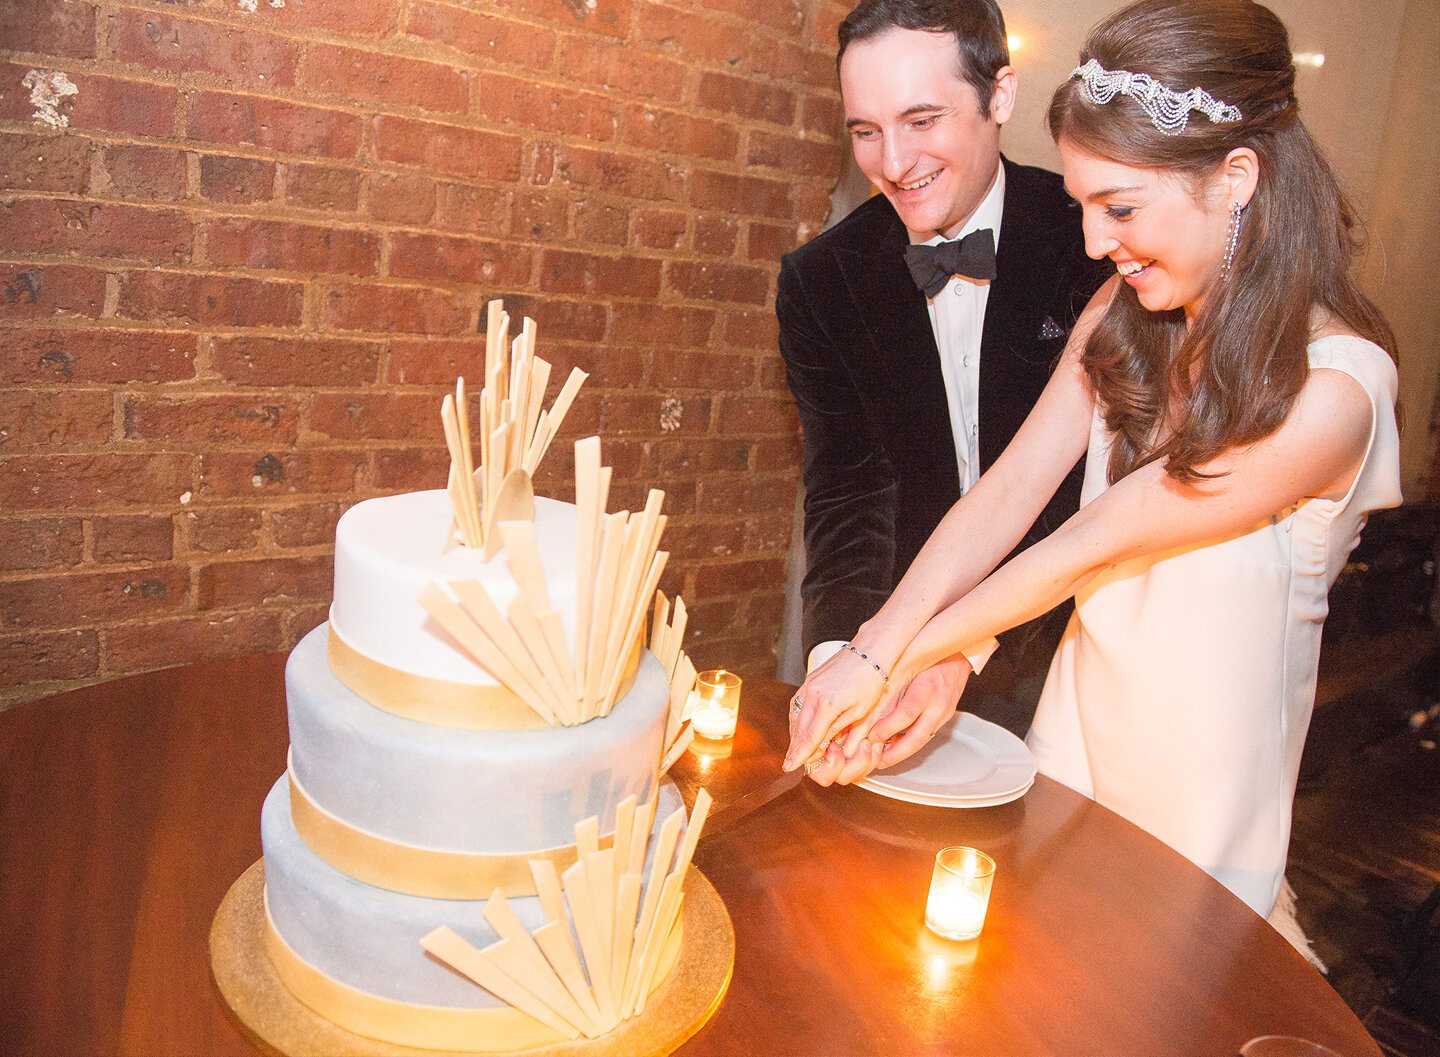 Jill and Mark cutting their wedding cake